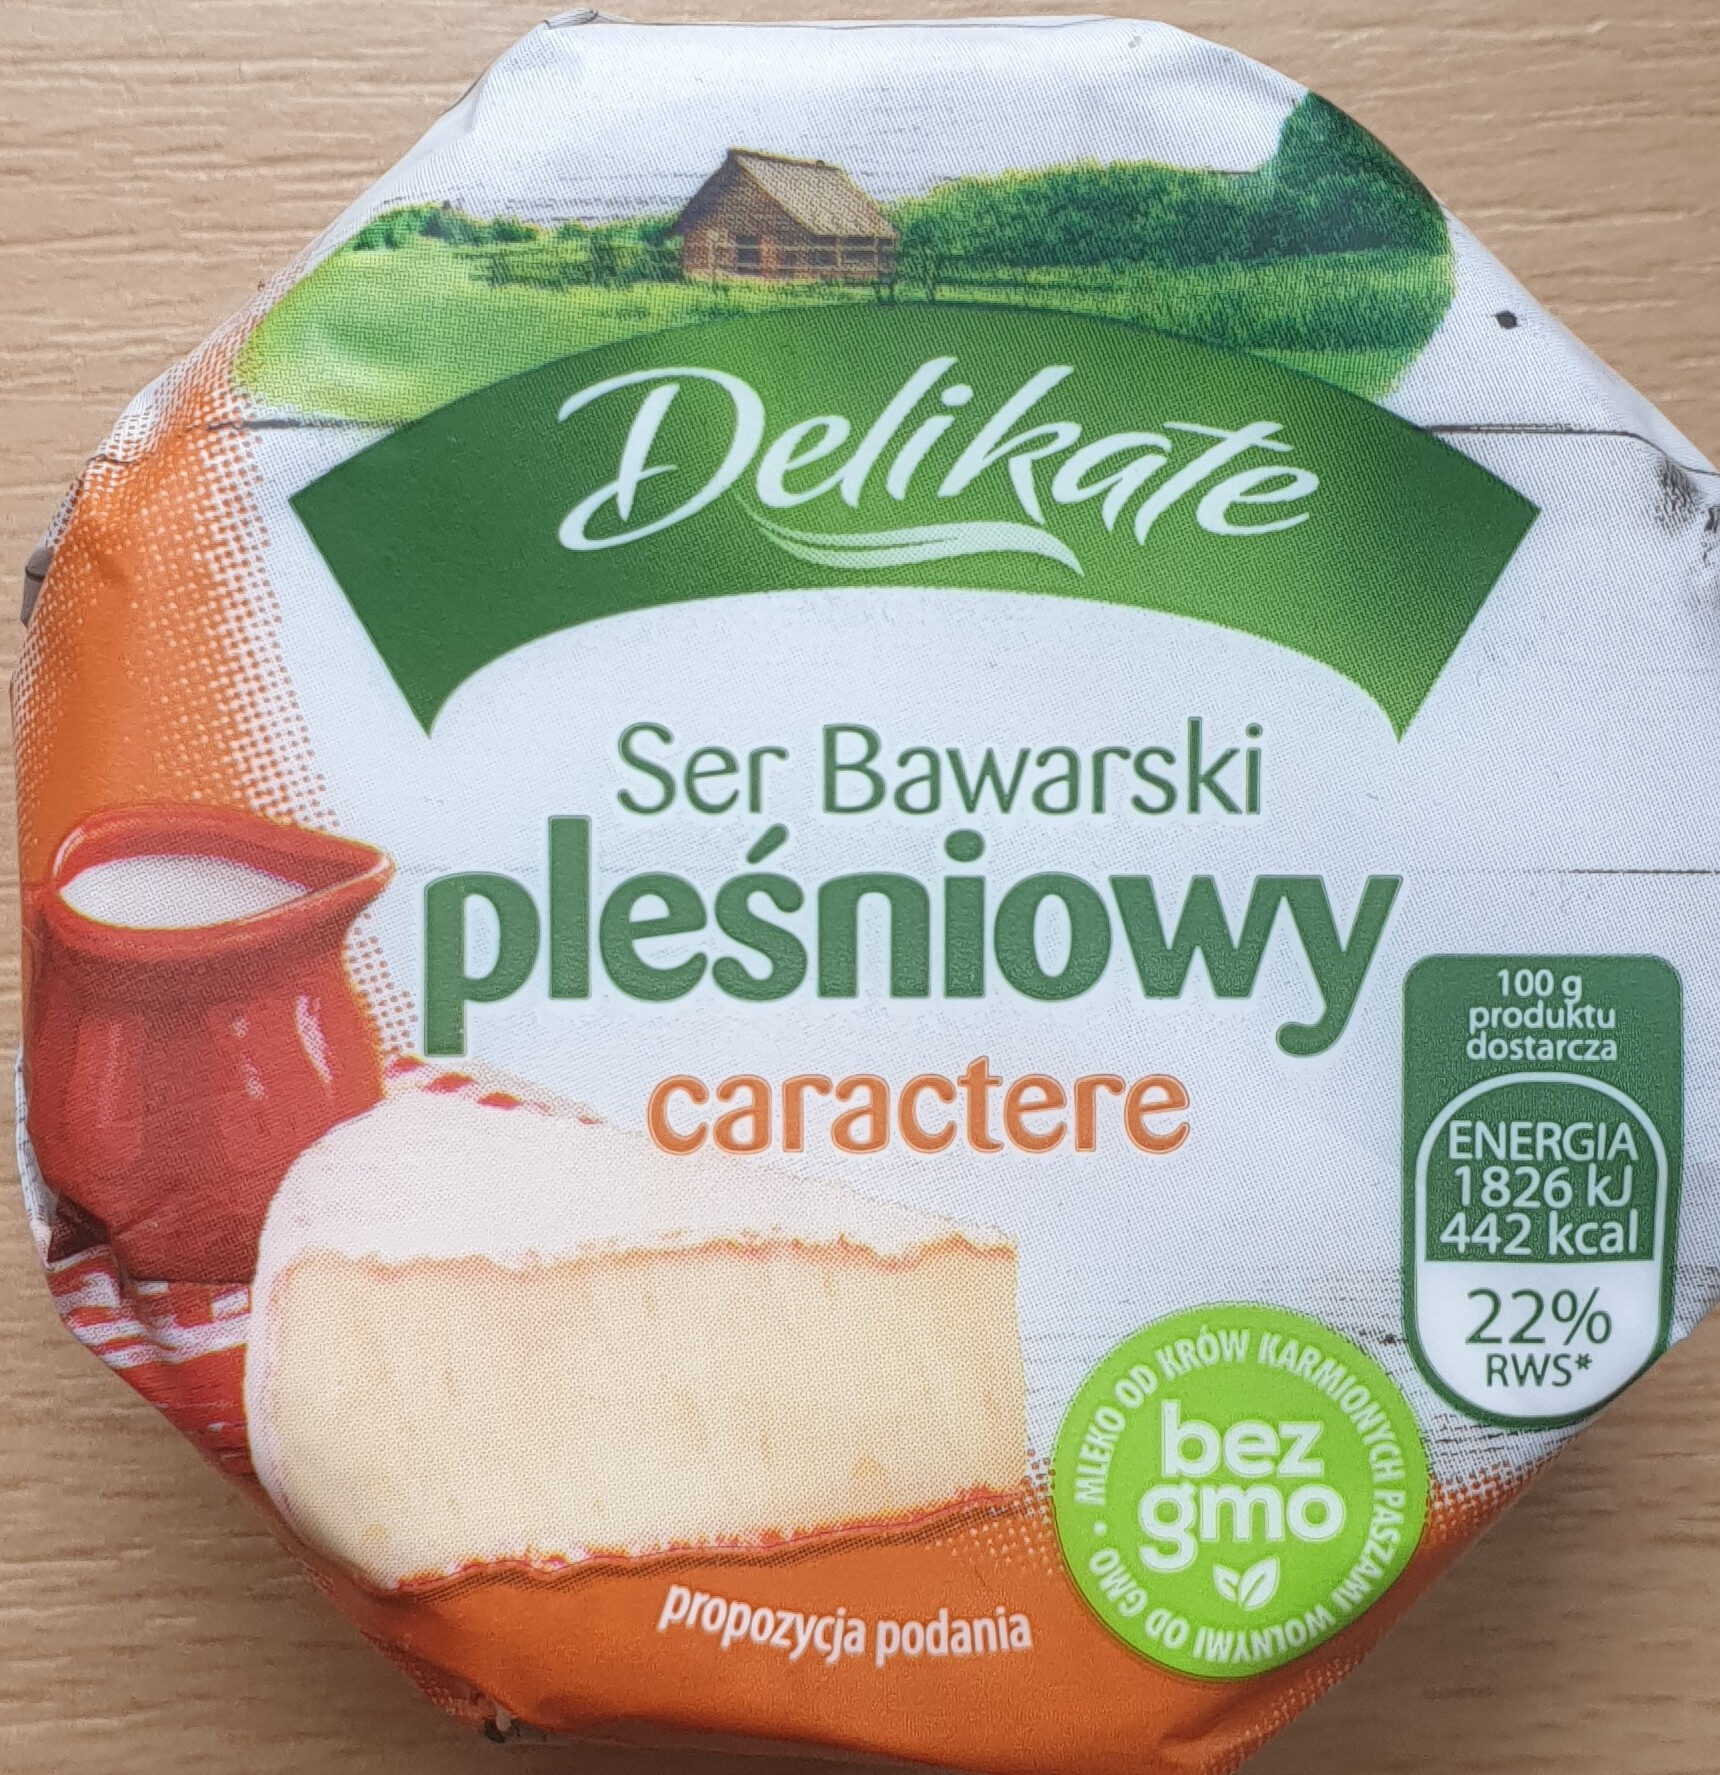 Ser bawarski pleśniowy, caractere - Produkt - pl